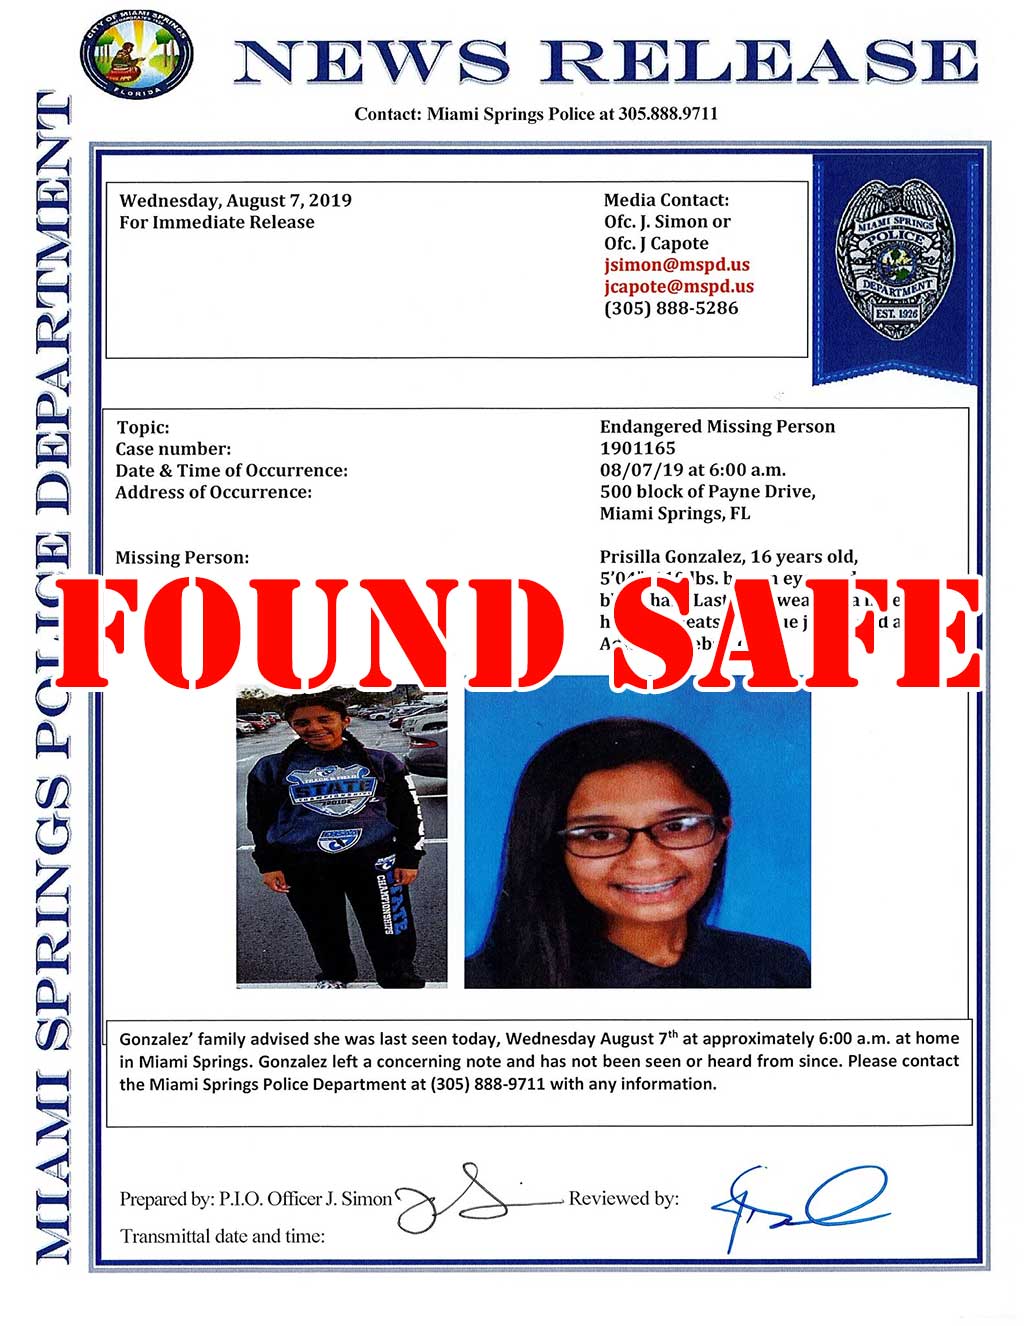 Missing Girl Found